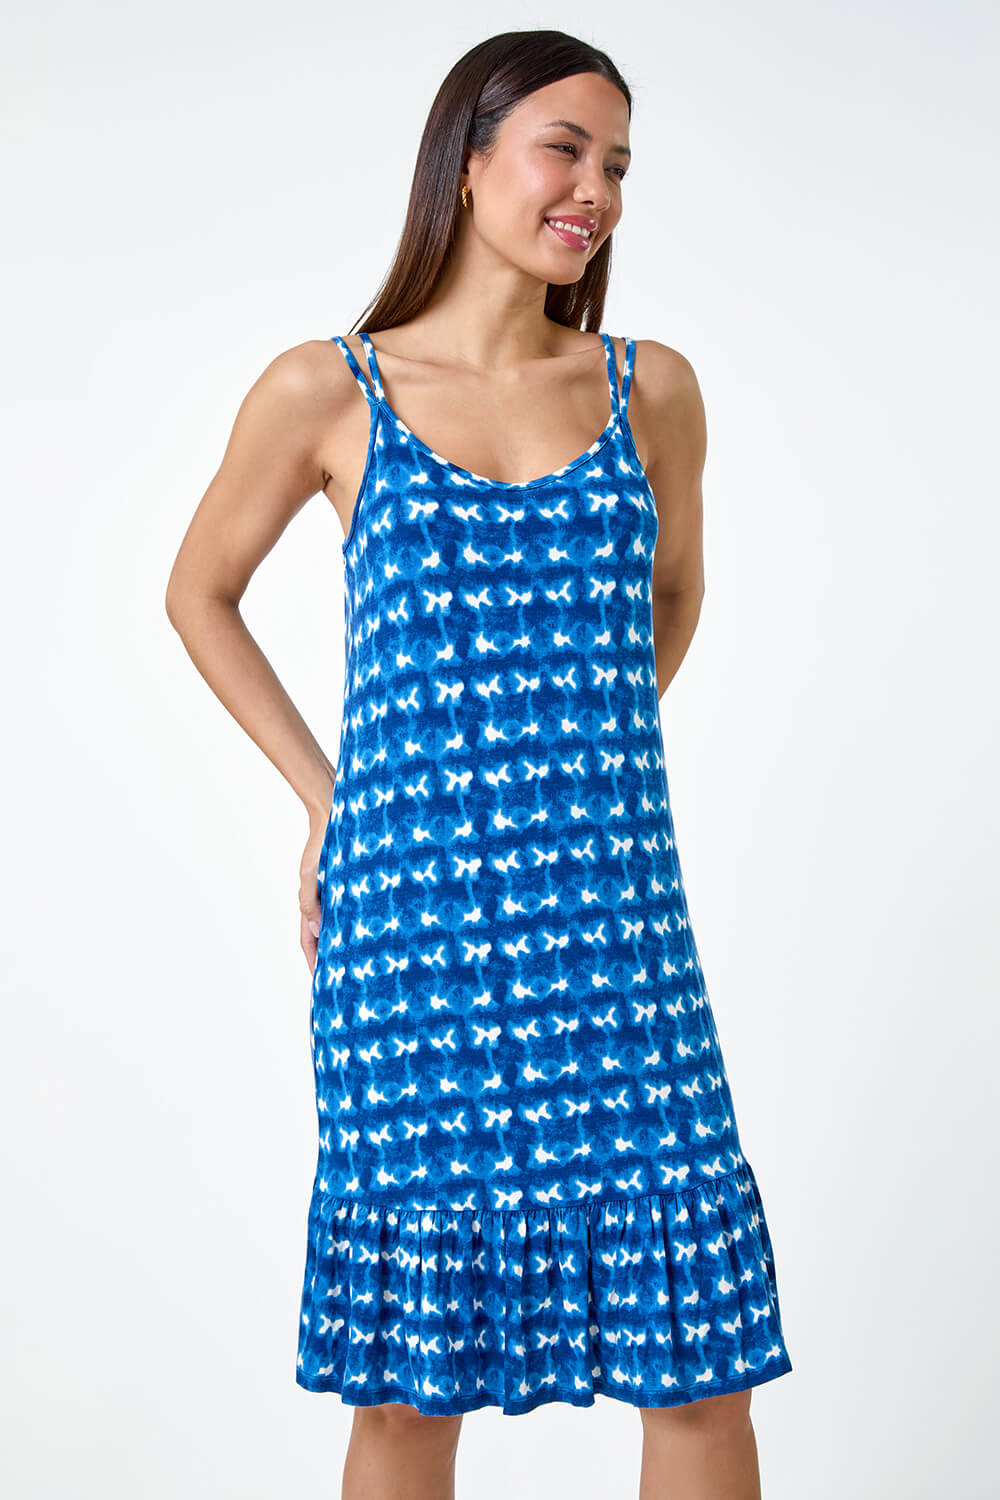 Blue Tie Dye Print Strappy Stretch Dress, Image 2 of 5